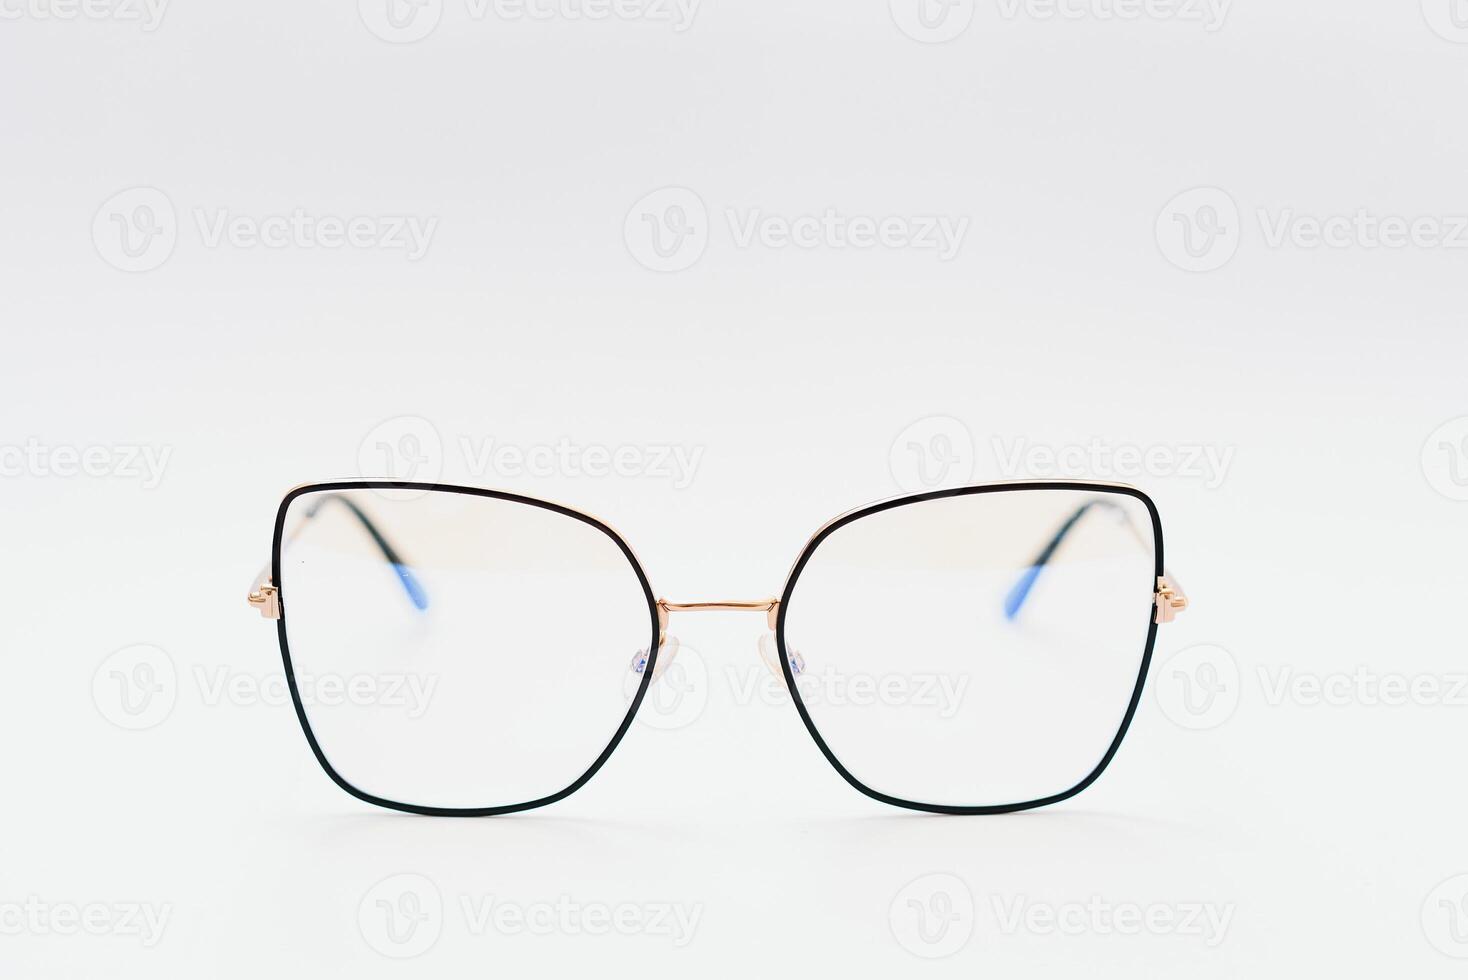 mode glasögon stil inramade isolerat på vit bakgrund foto